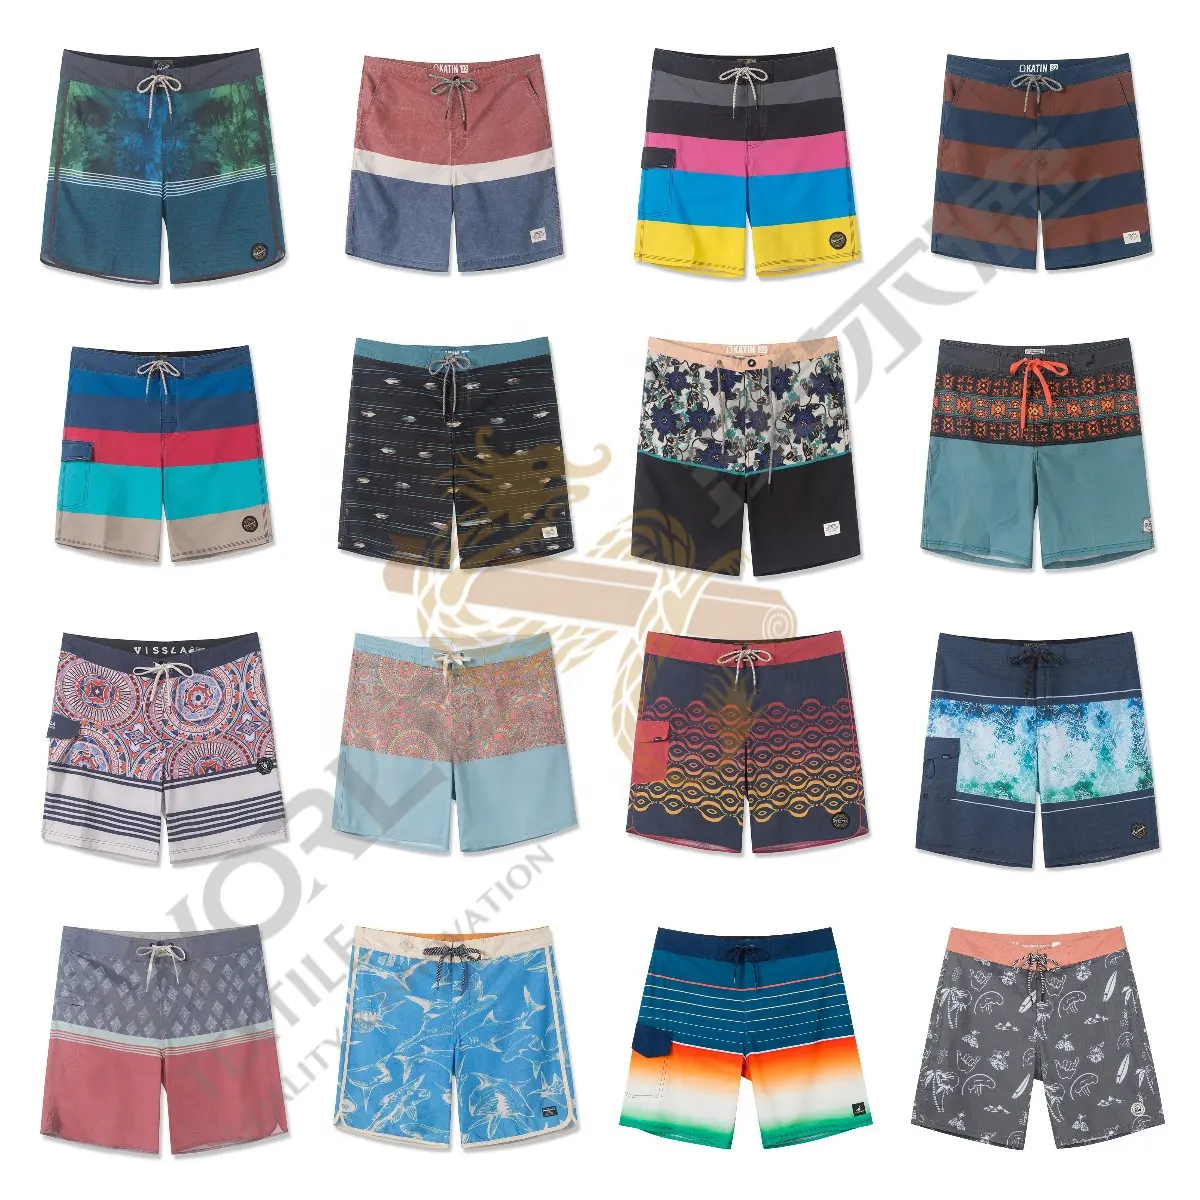 Design your own logo swim trunks wholesale custom mens beach shorts 4 way stretch board shorts